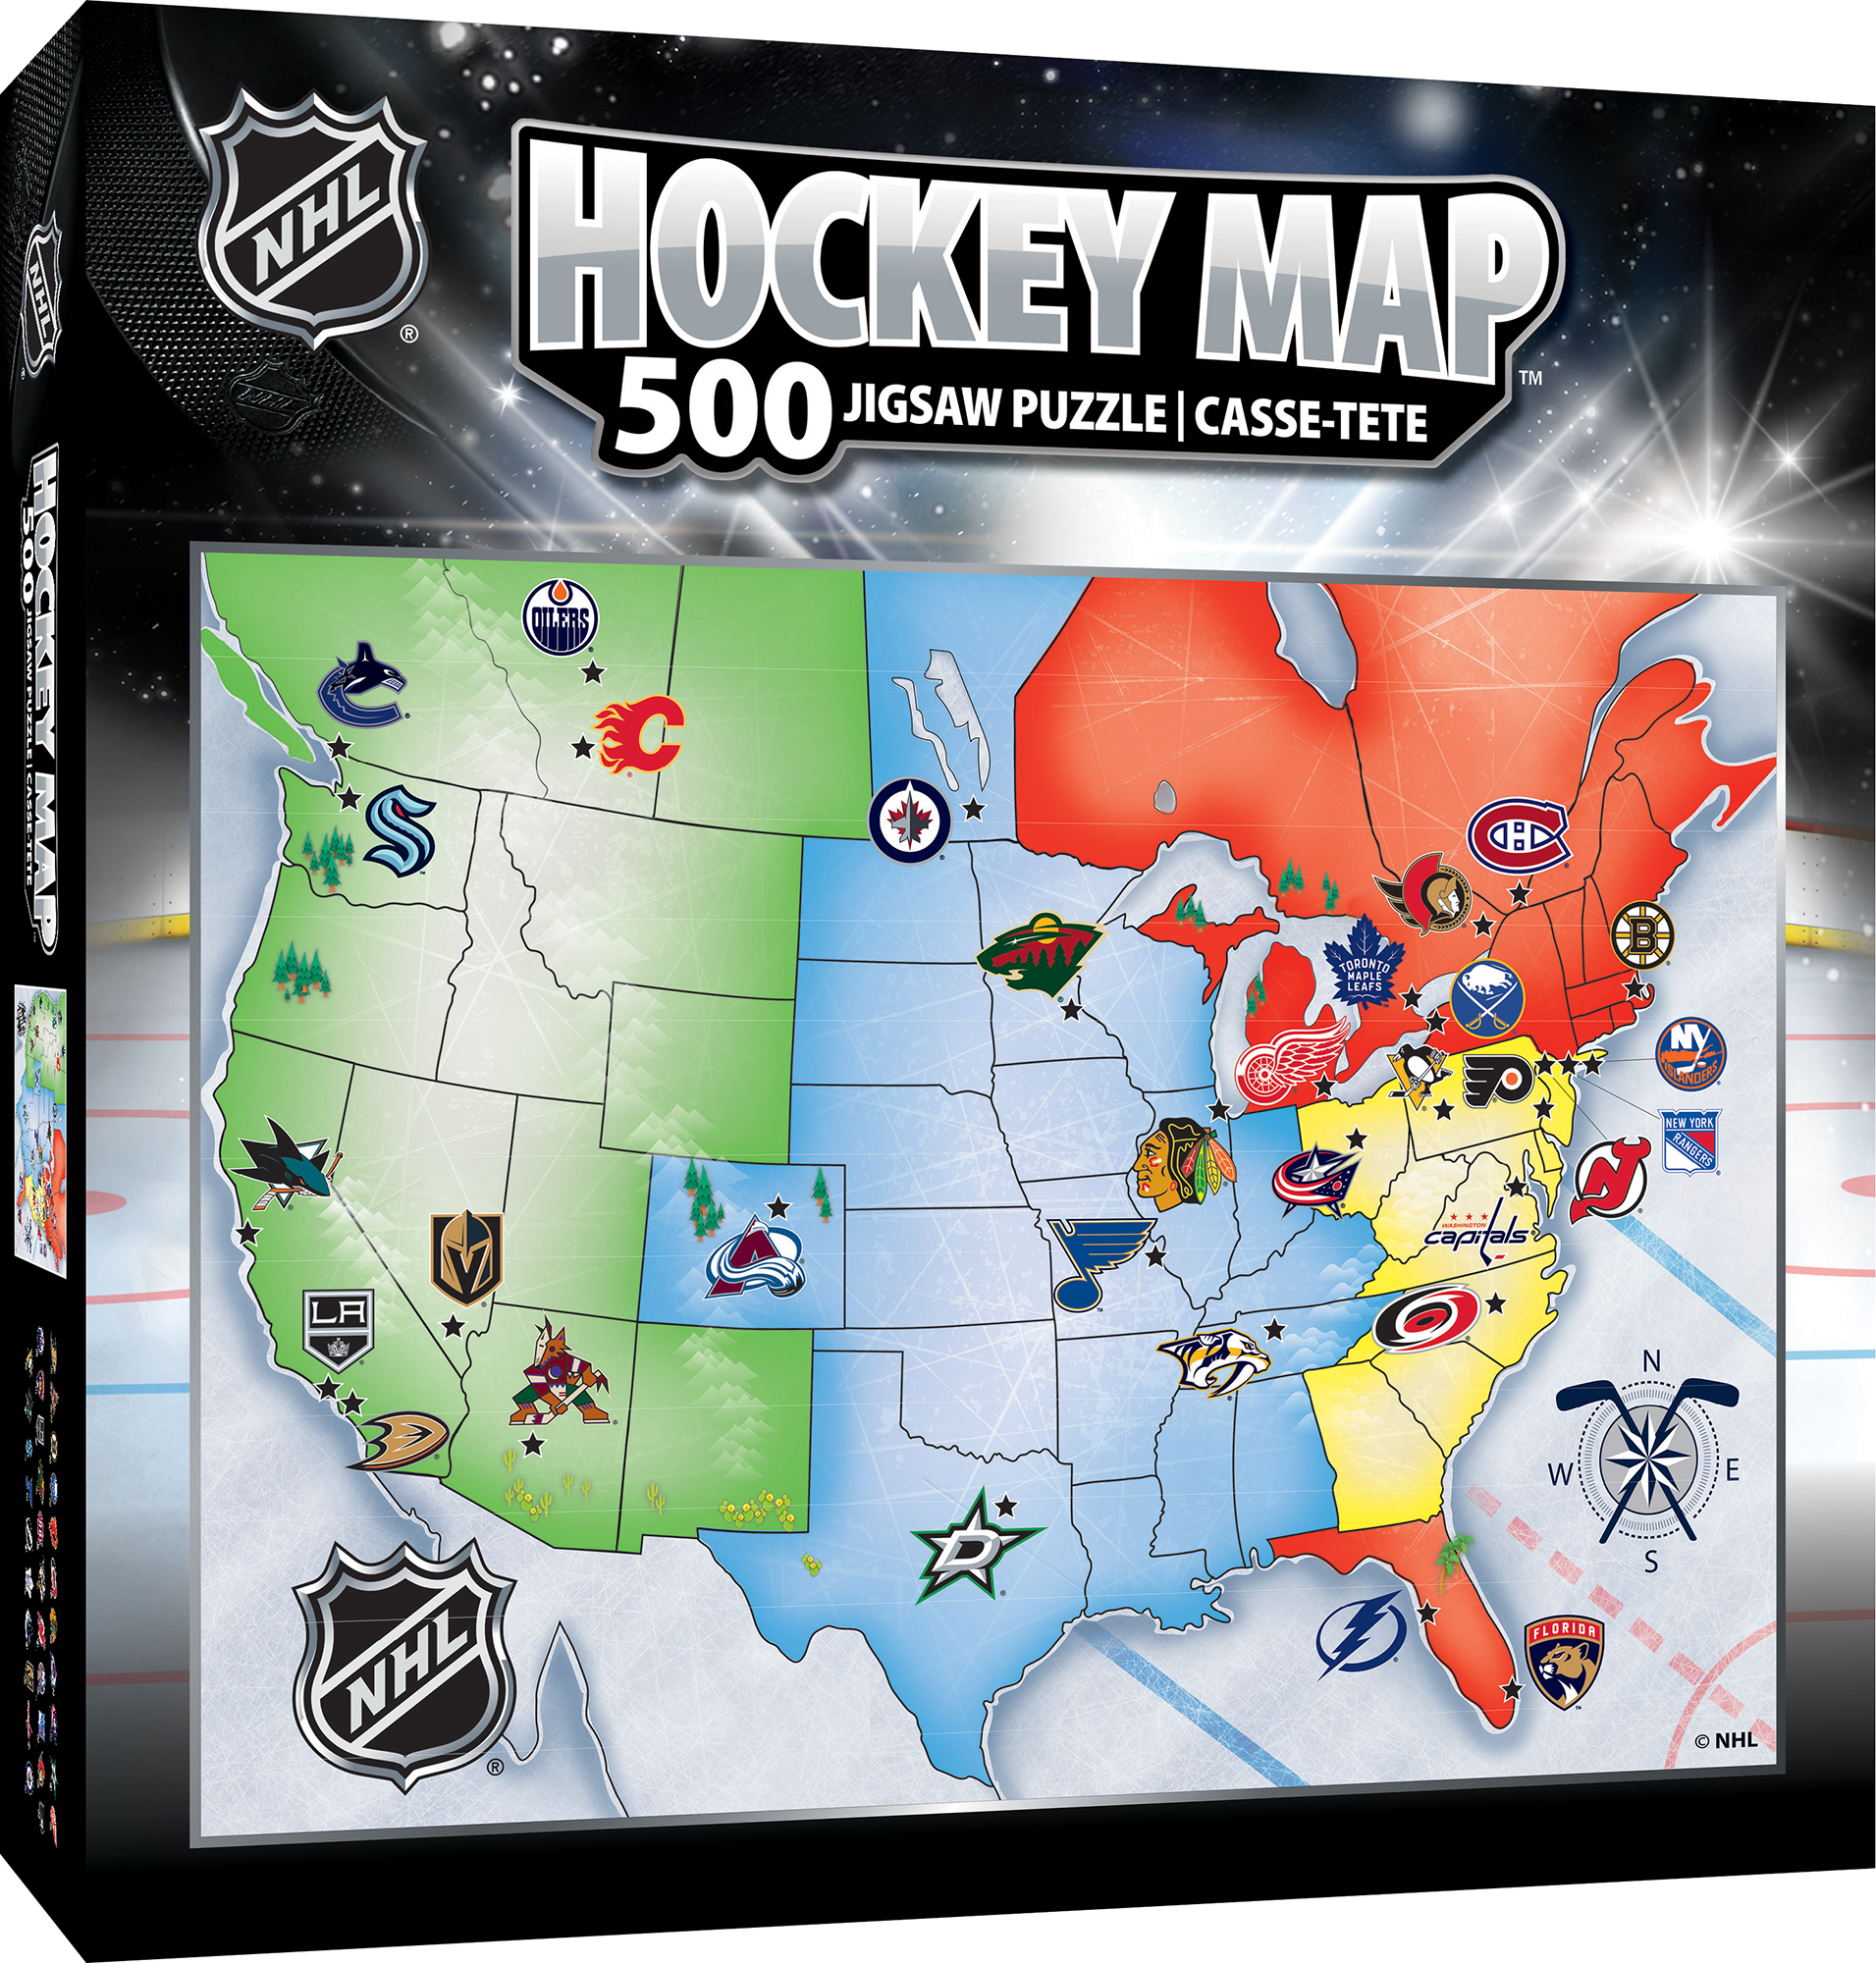 NHL League Hockey Map